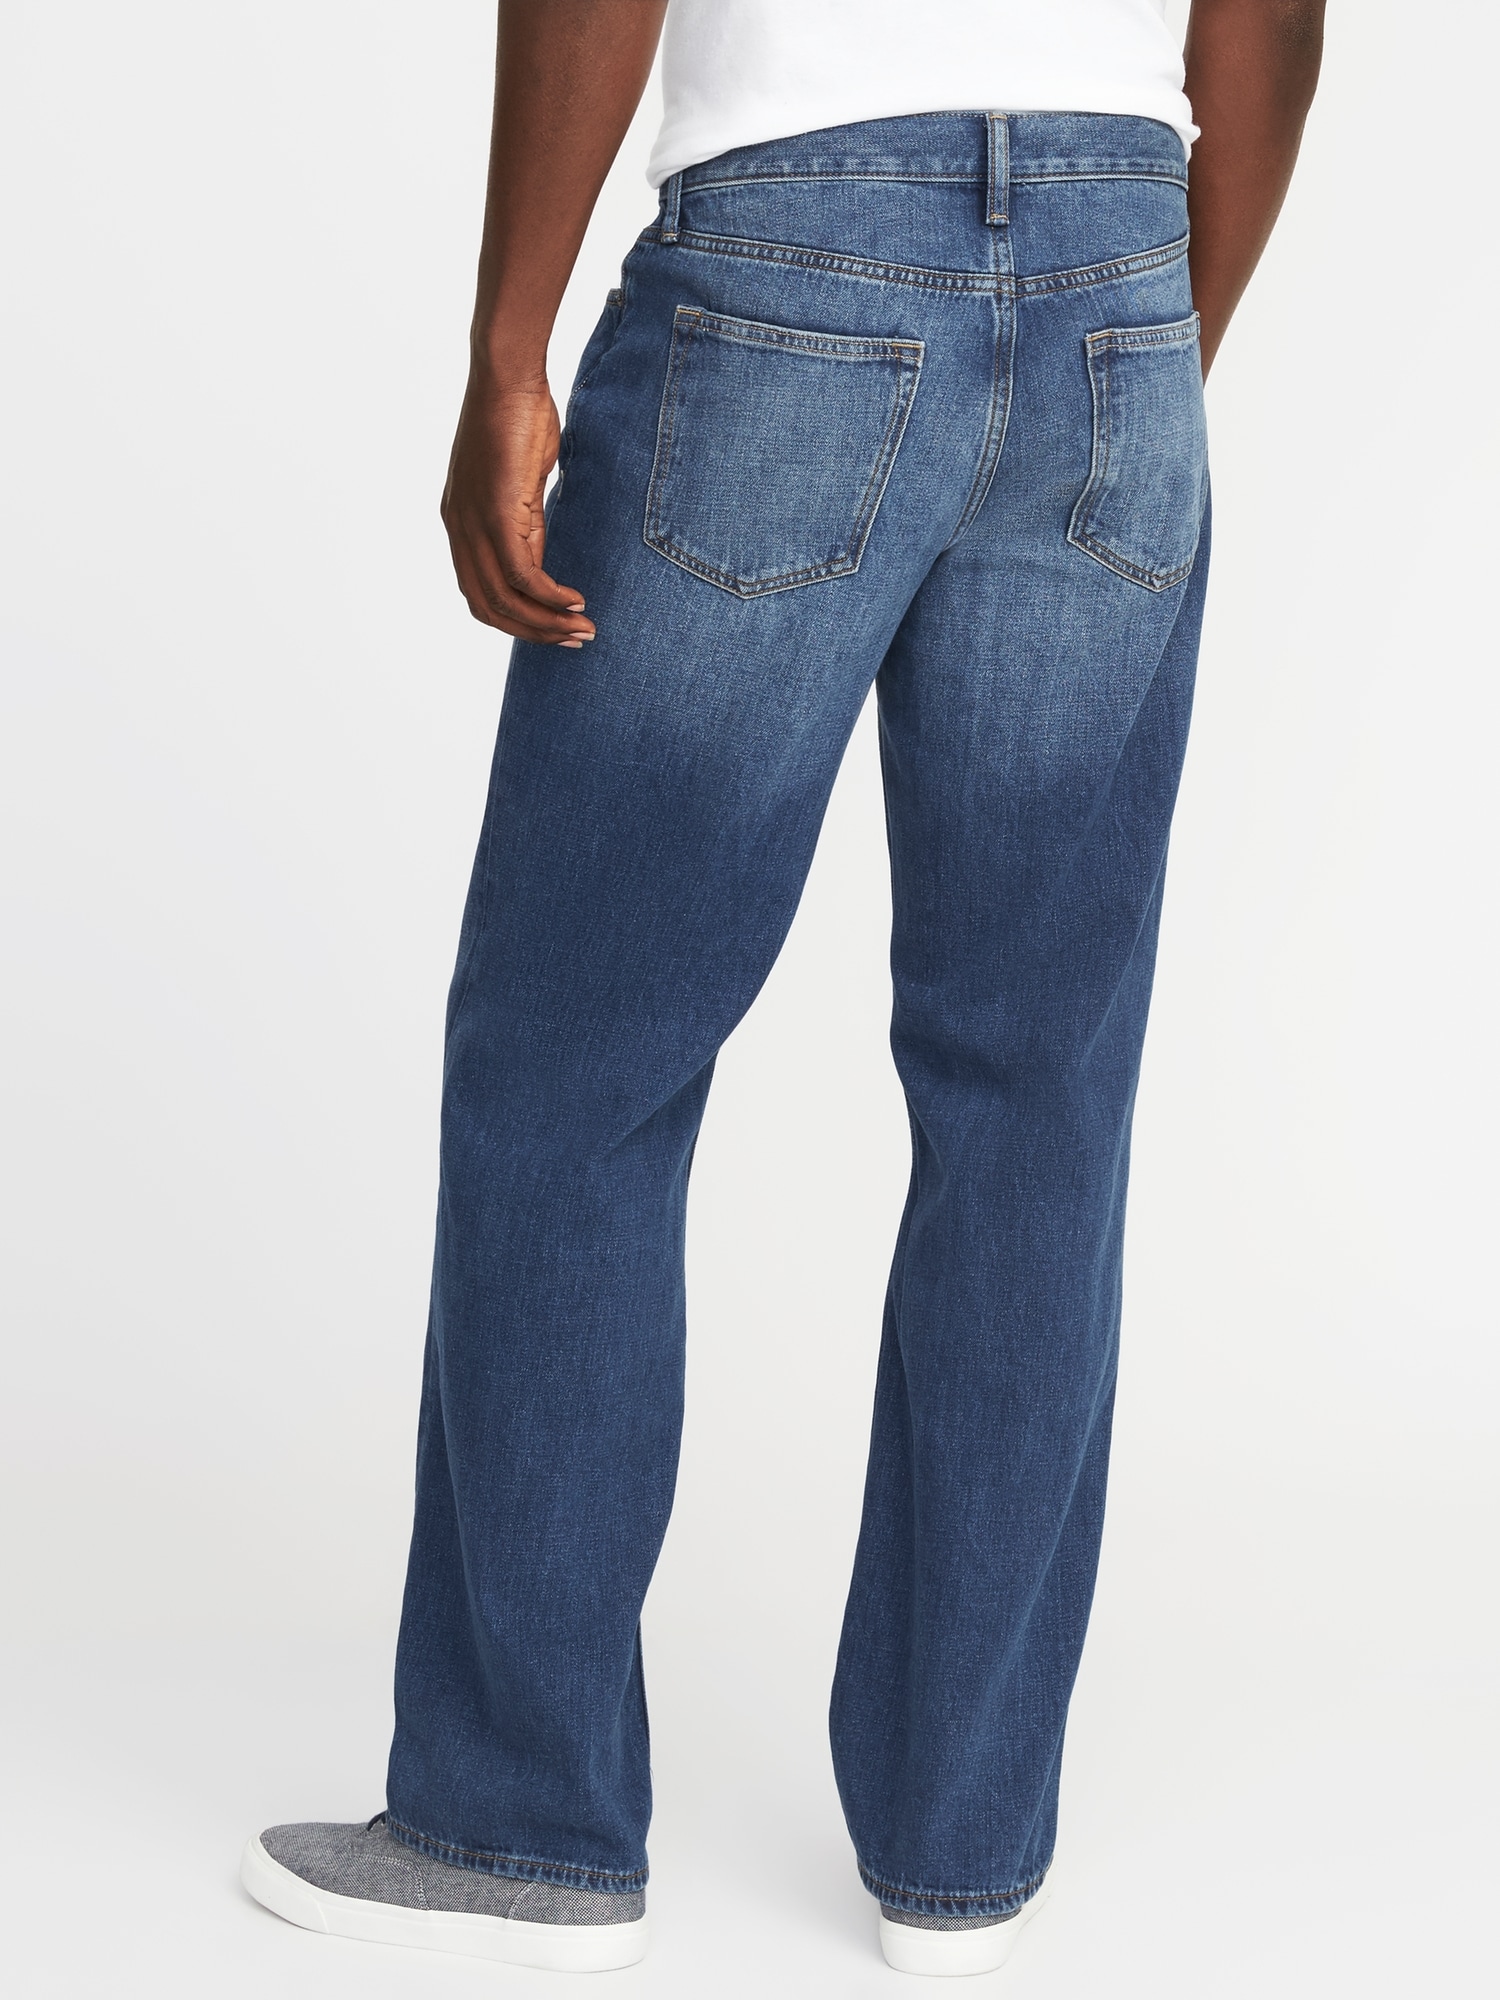 Loose Rigid Jeans For Men | Old Navy